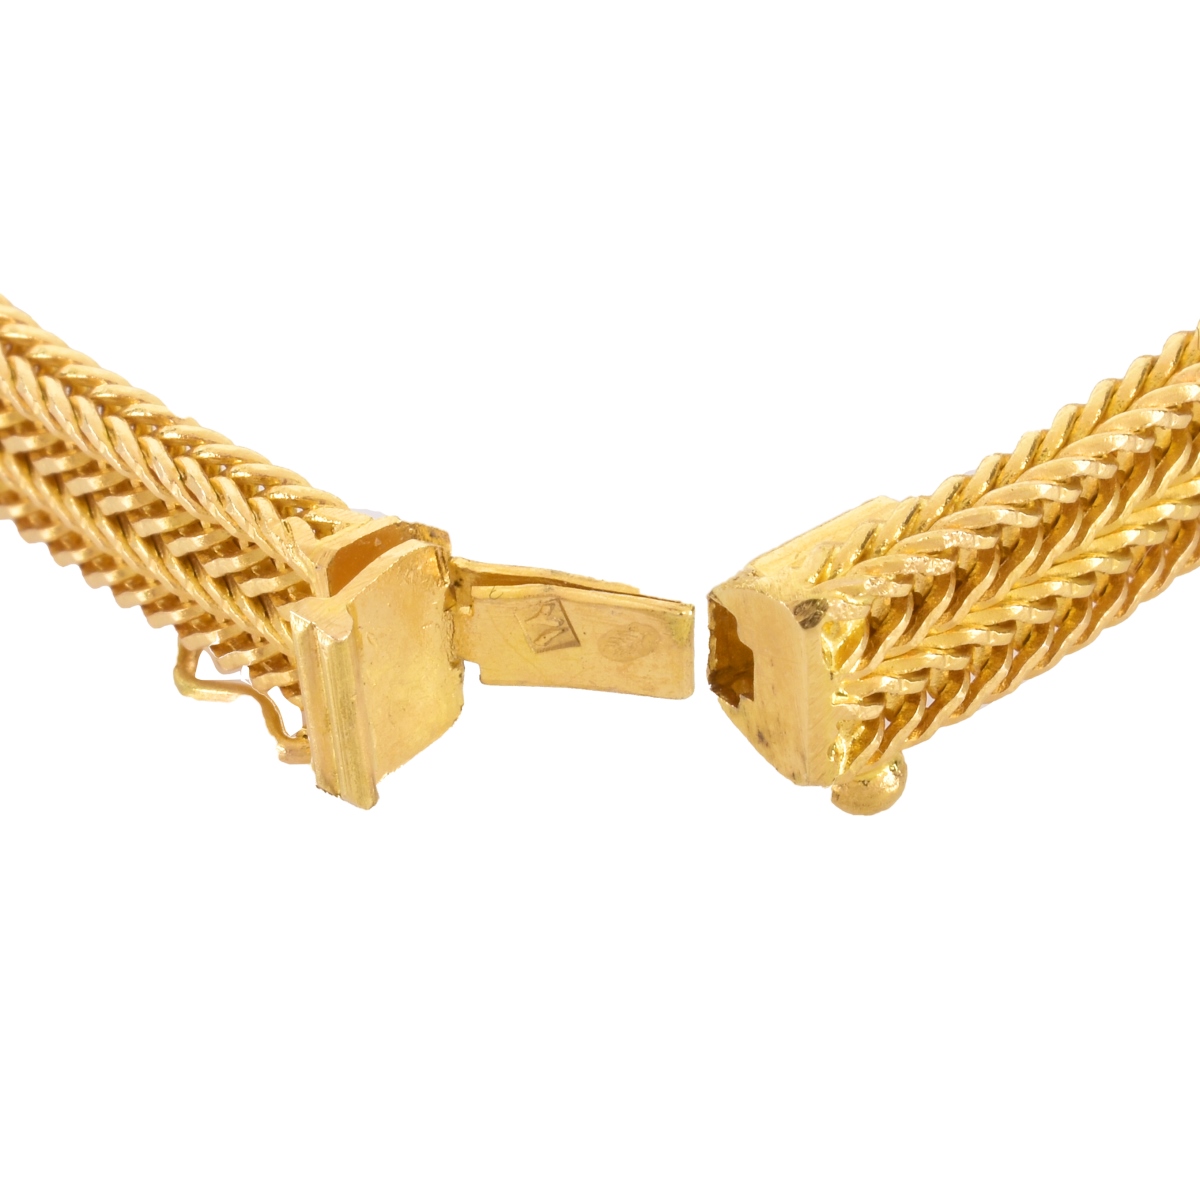 18K Gold and Turquoise Bracelet